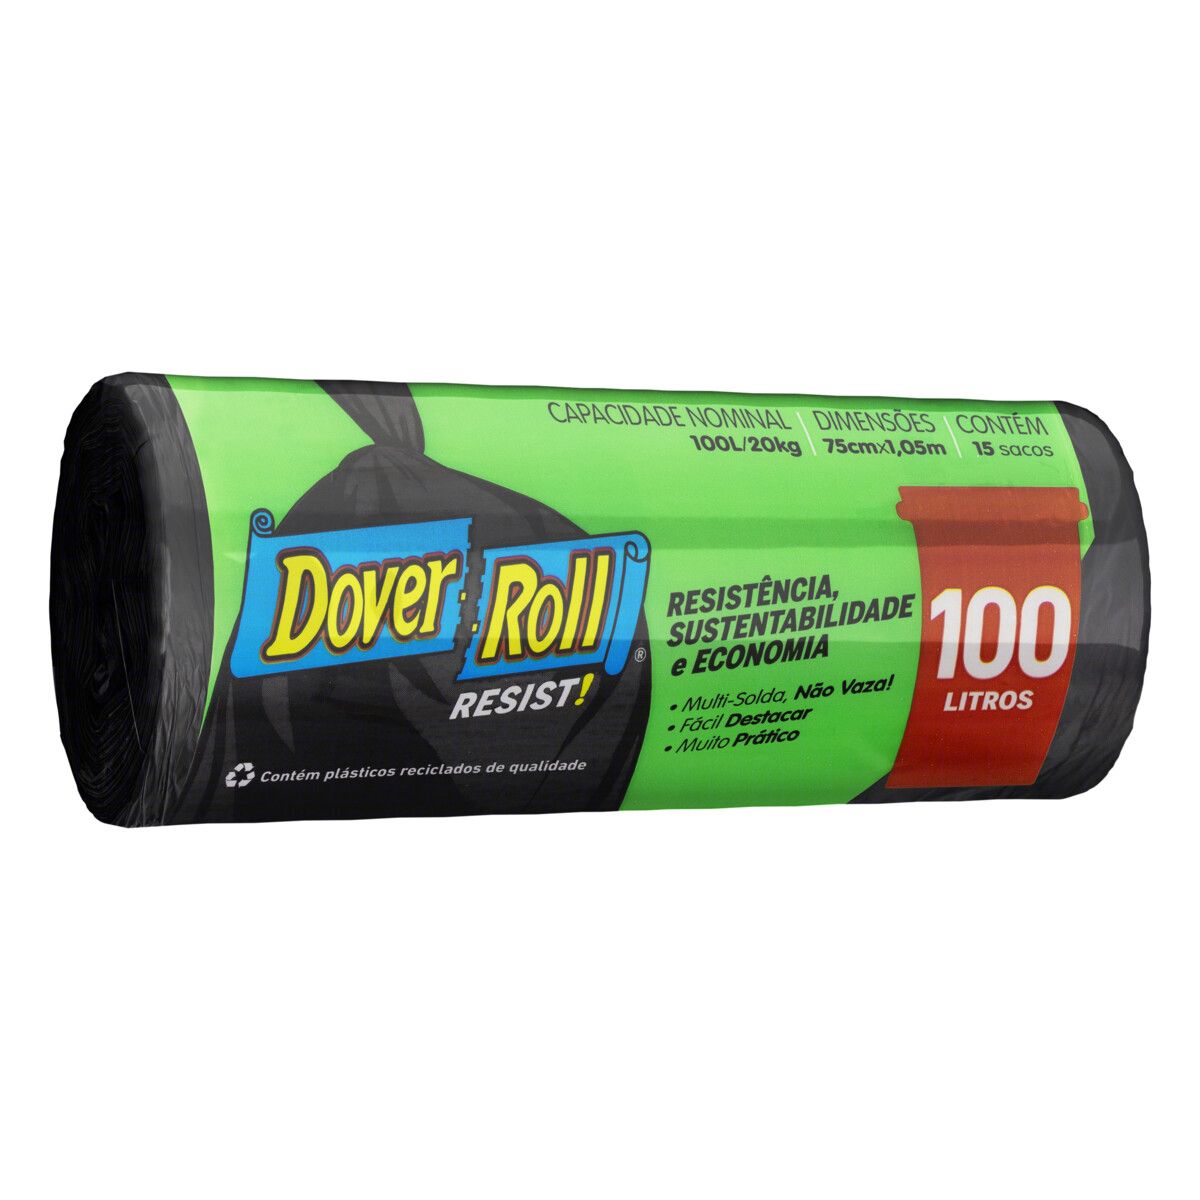 Saco para Lixo Dover Roll 100L Resist 15 Unidades image number 3